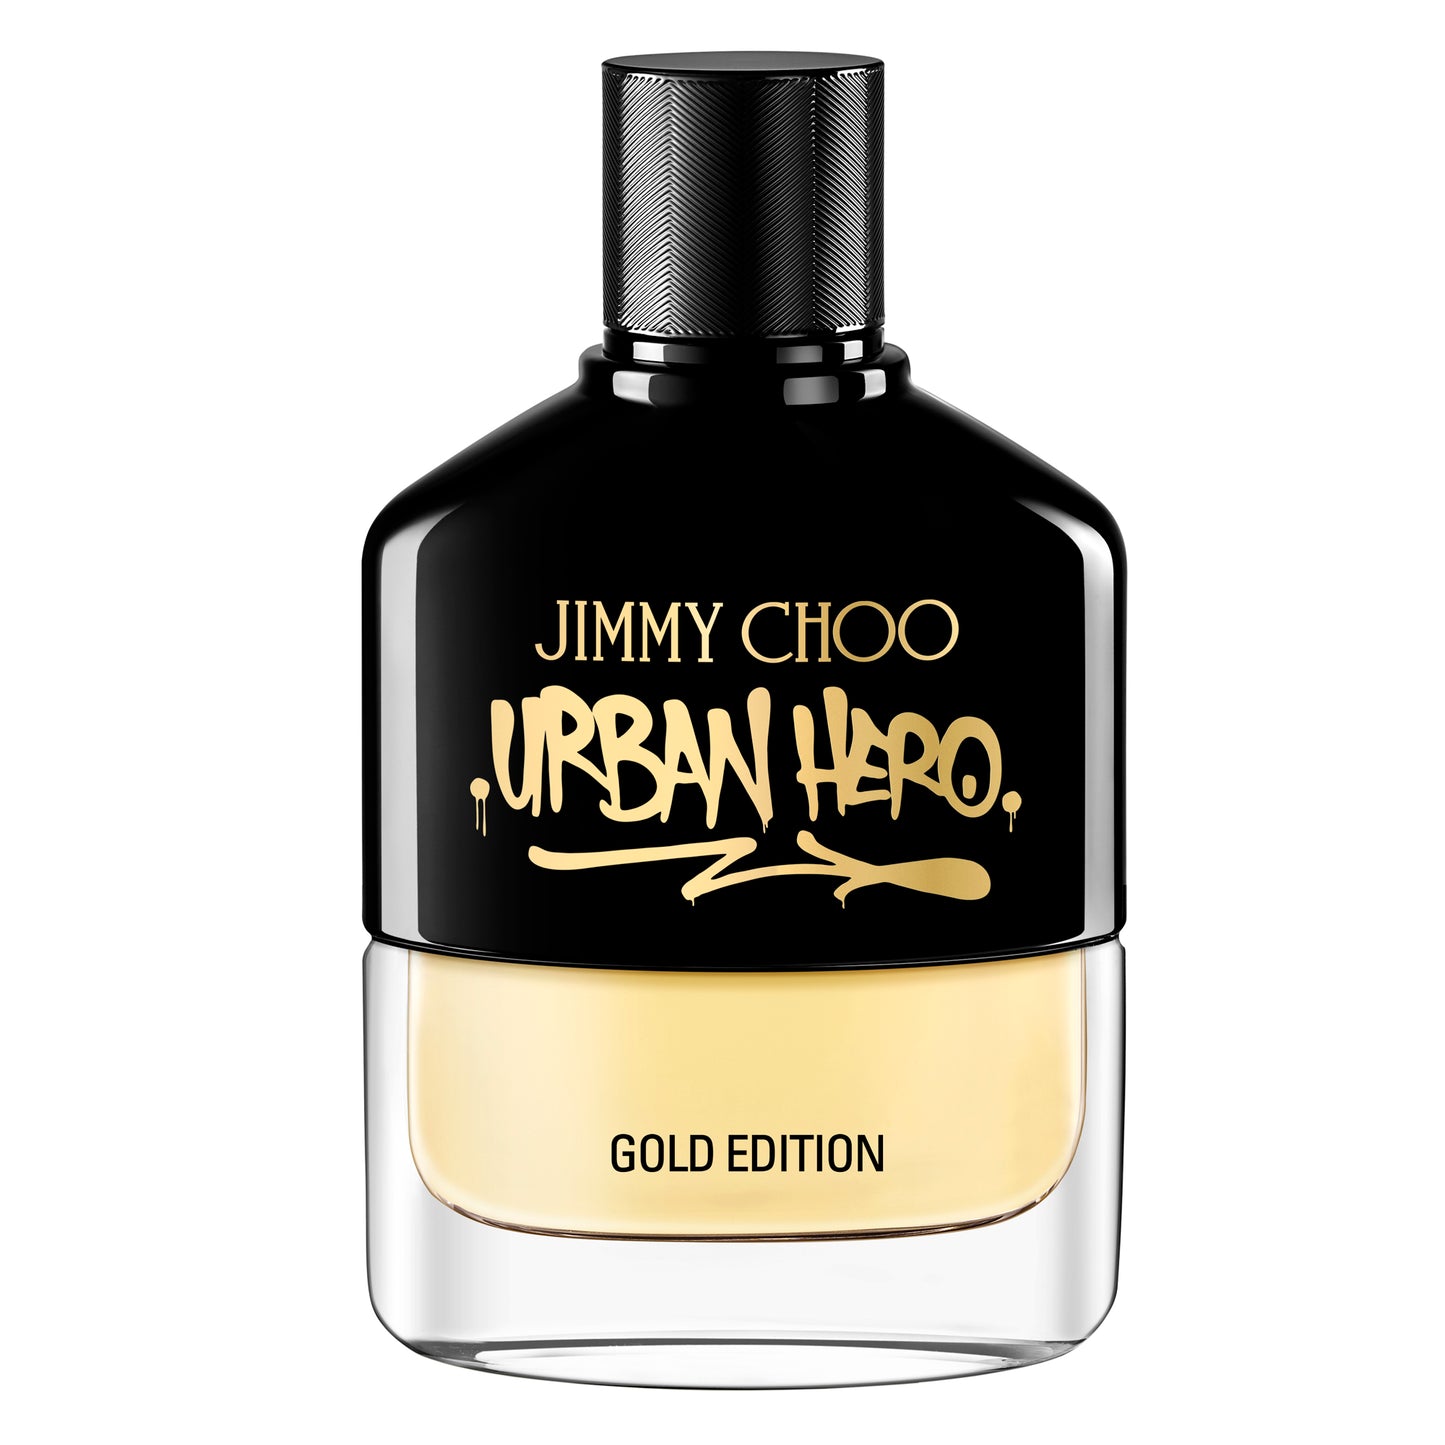 Jimmy Choo Urban Hero Gold Edition Eau de Parfum. 3.4Oz/100ml